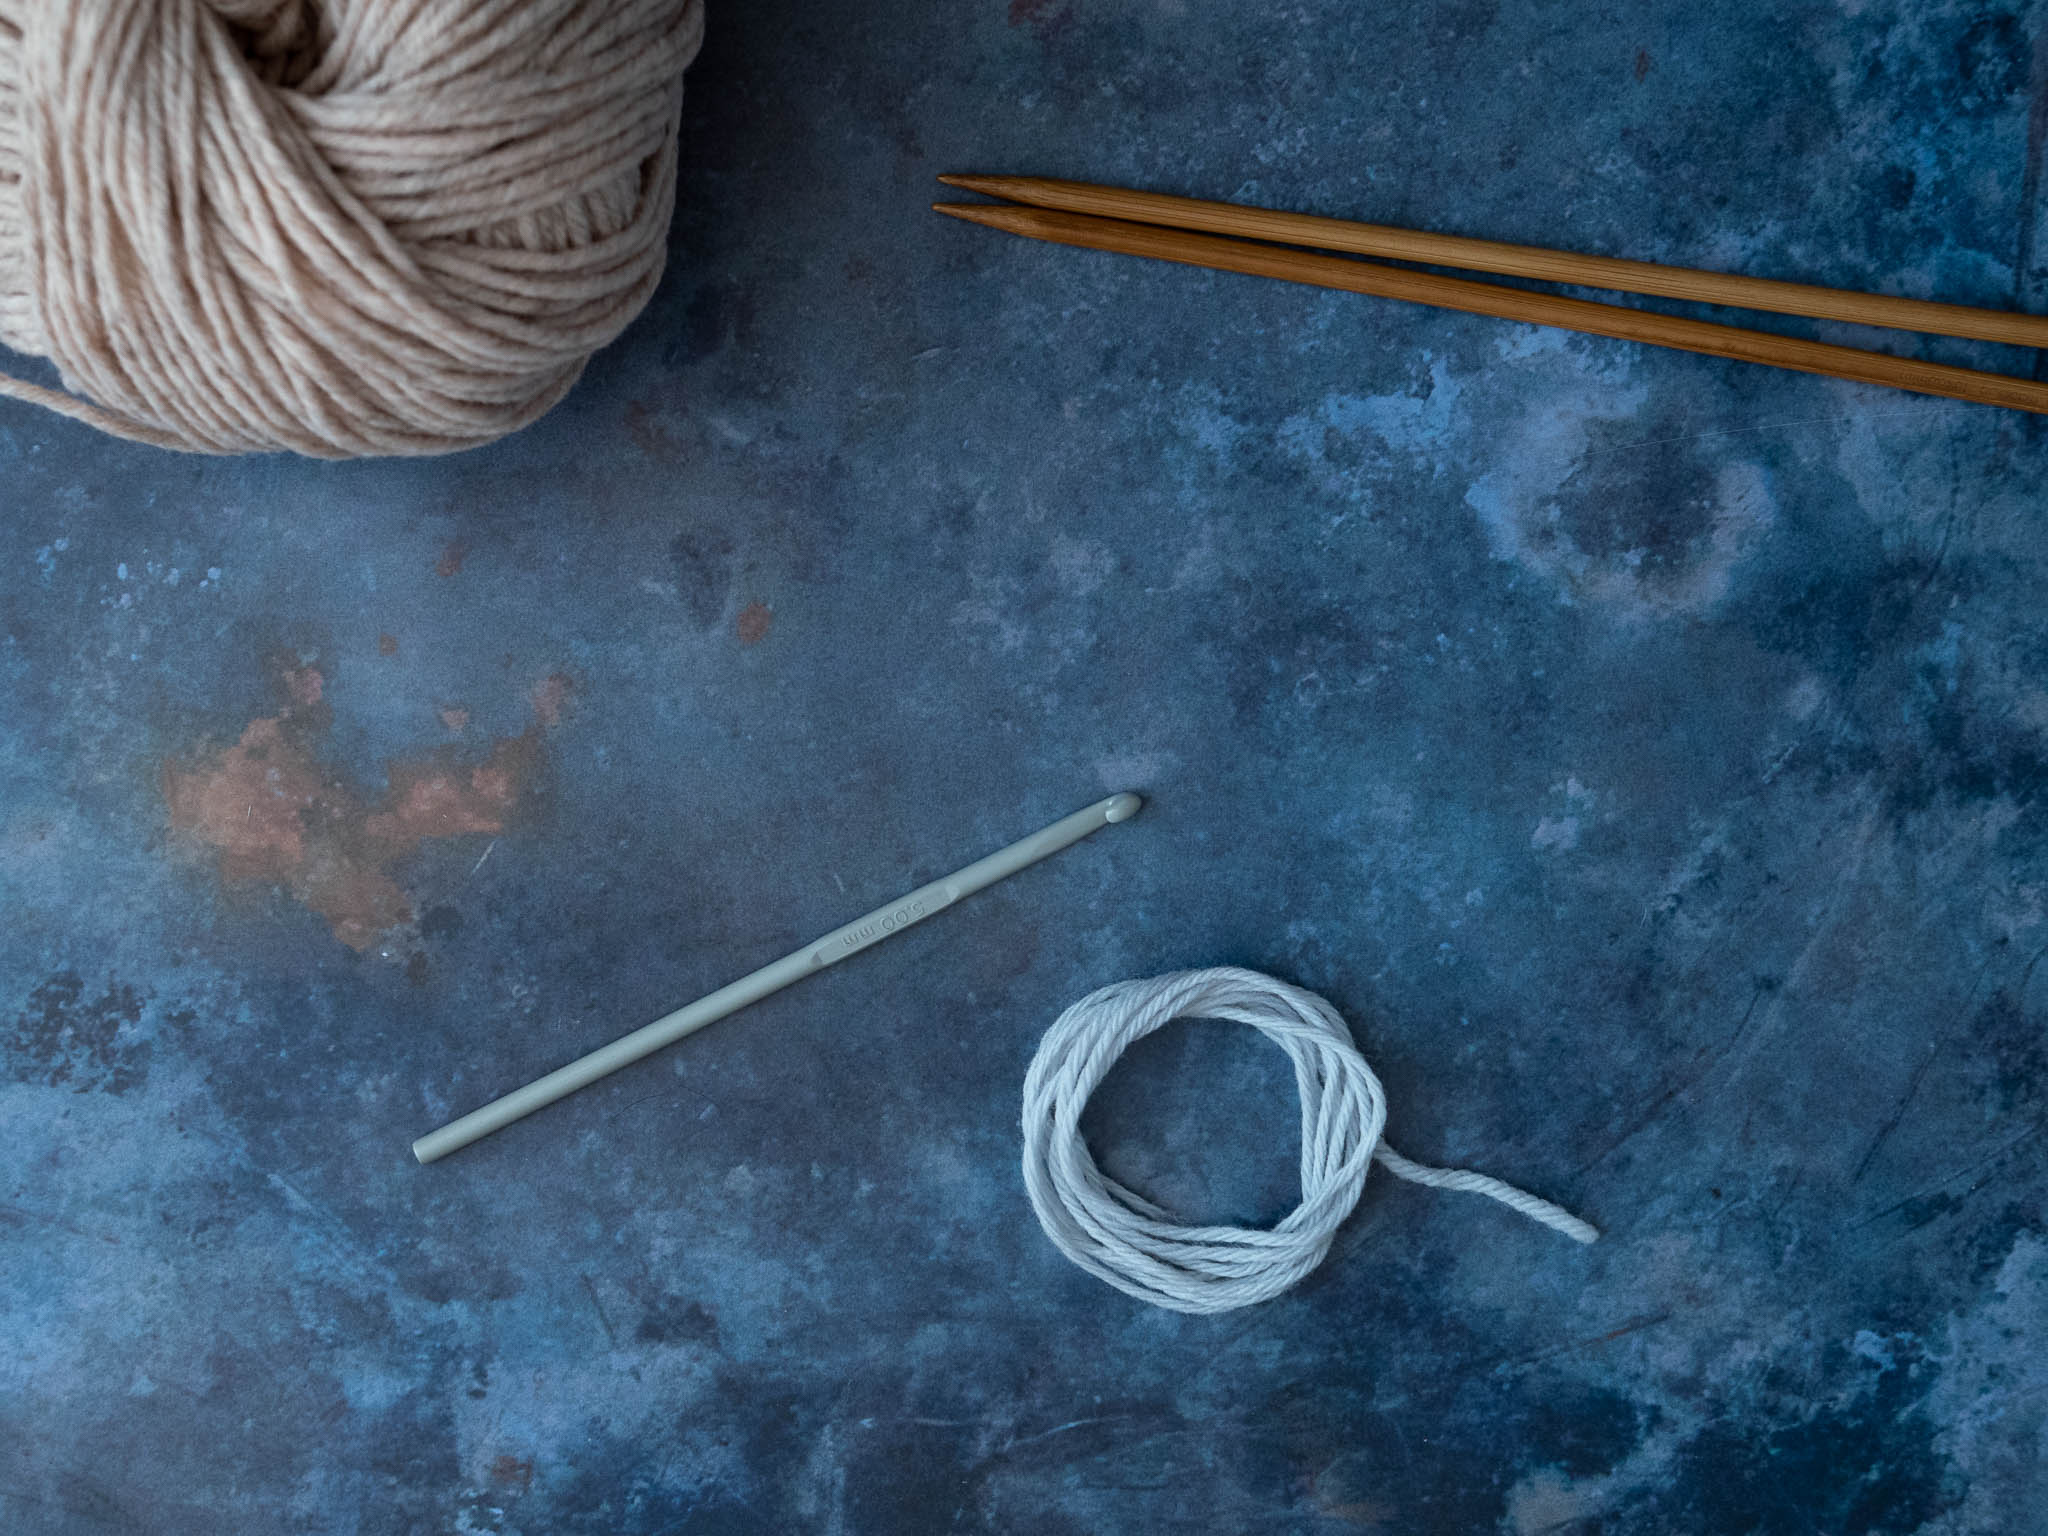 Crochet Beginner Guide: How To Make A Scrap Yarn Ball